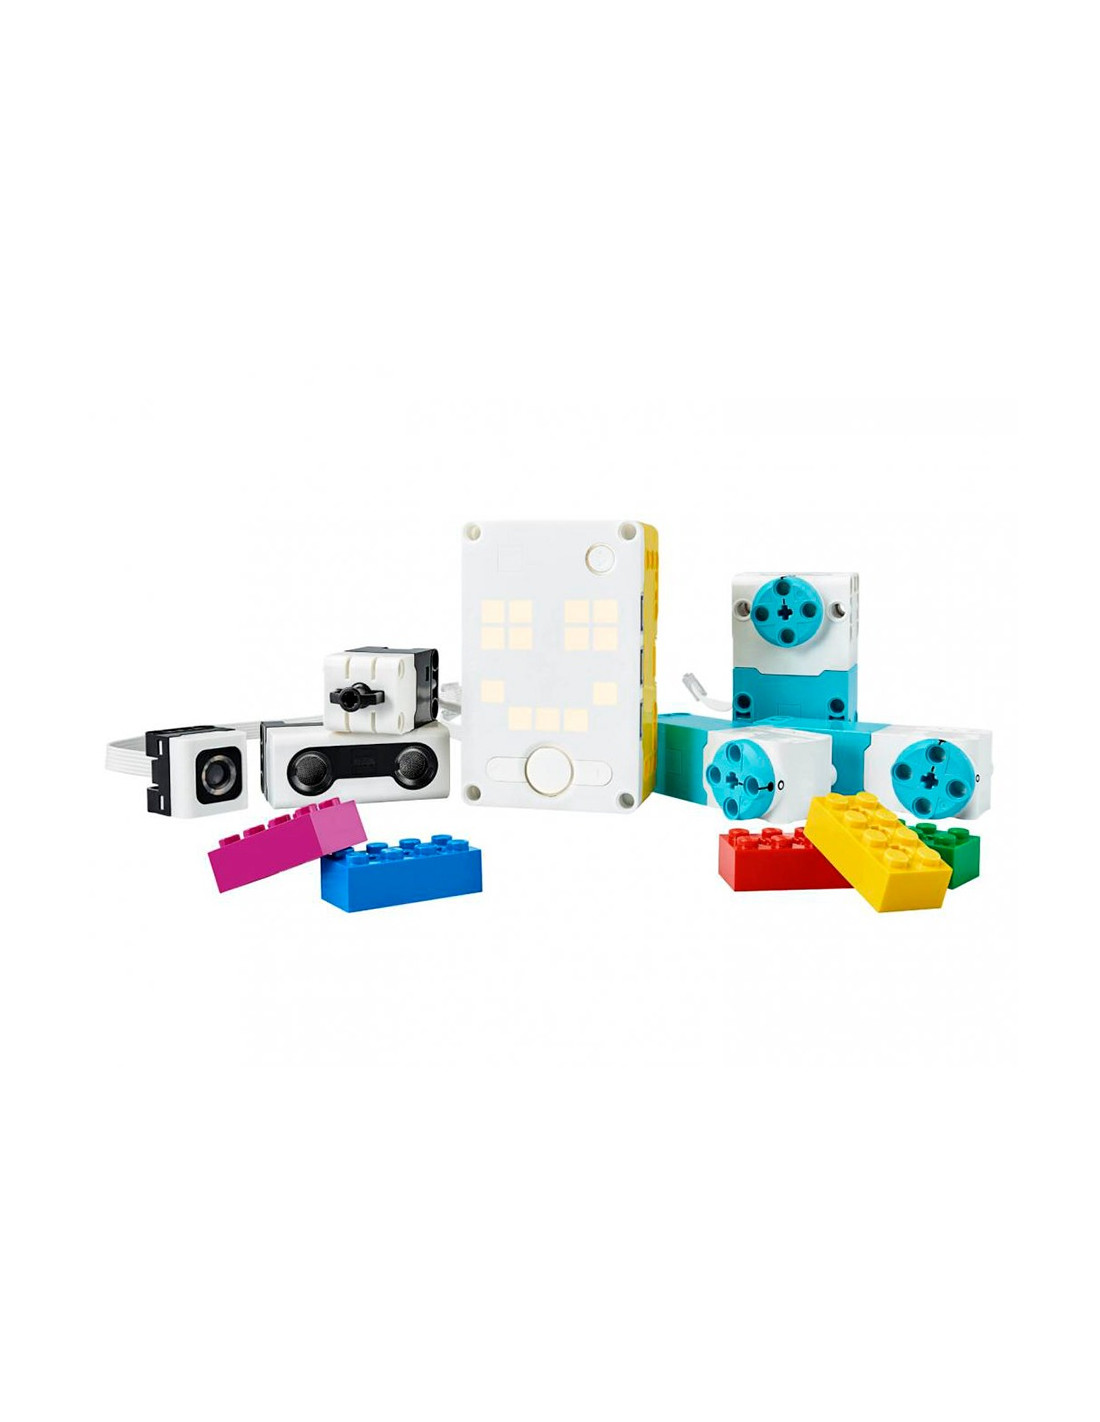 Robots educación - LEGO® Education SPIKE Prime